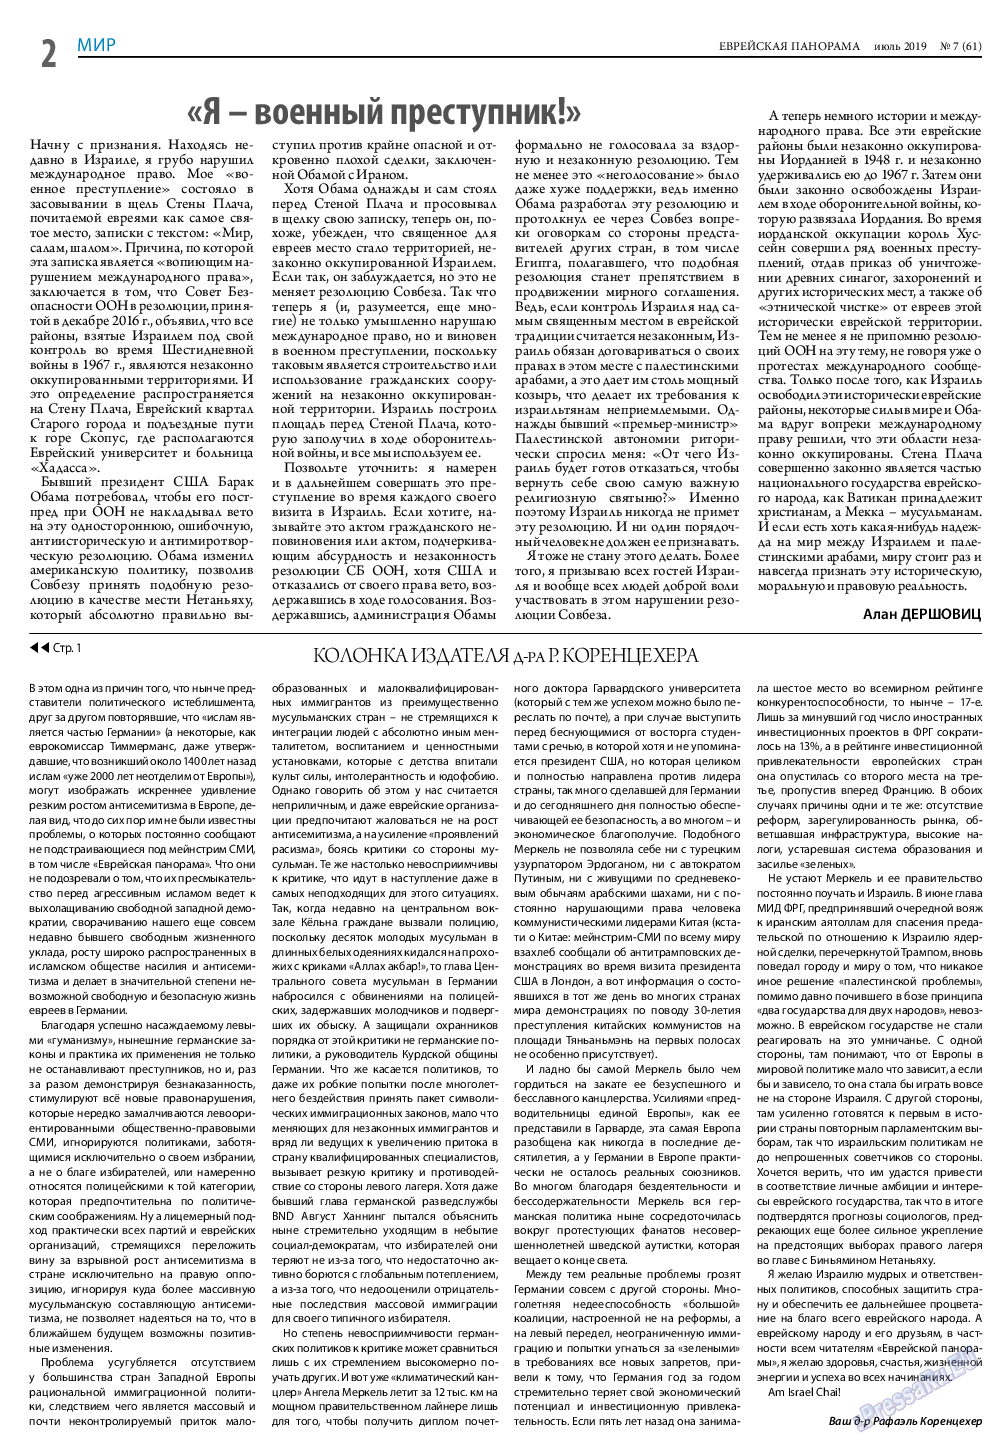 Еврейская панорама, газета. 2019 №7 стр.2